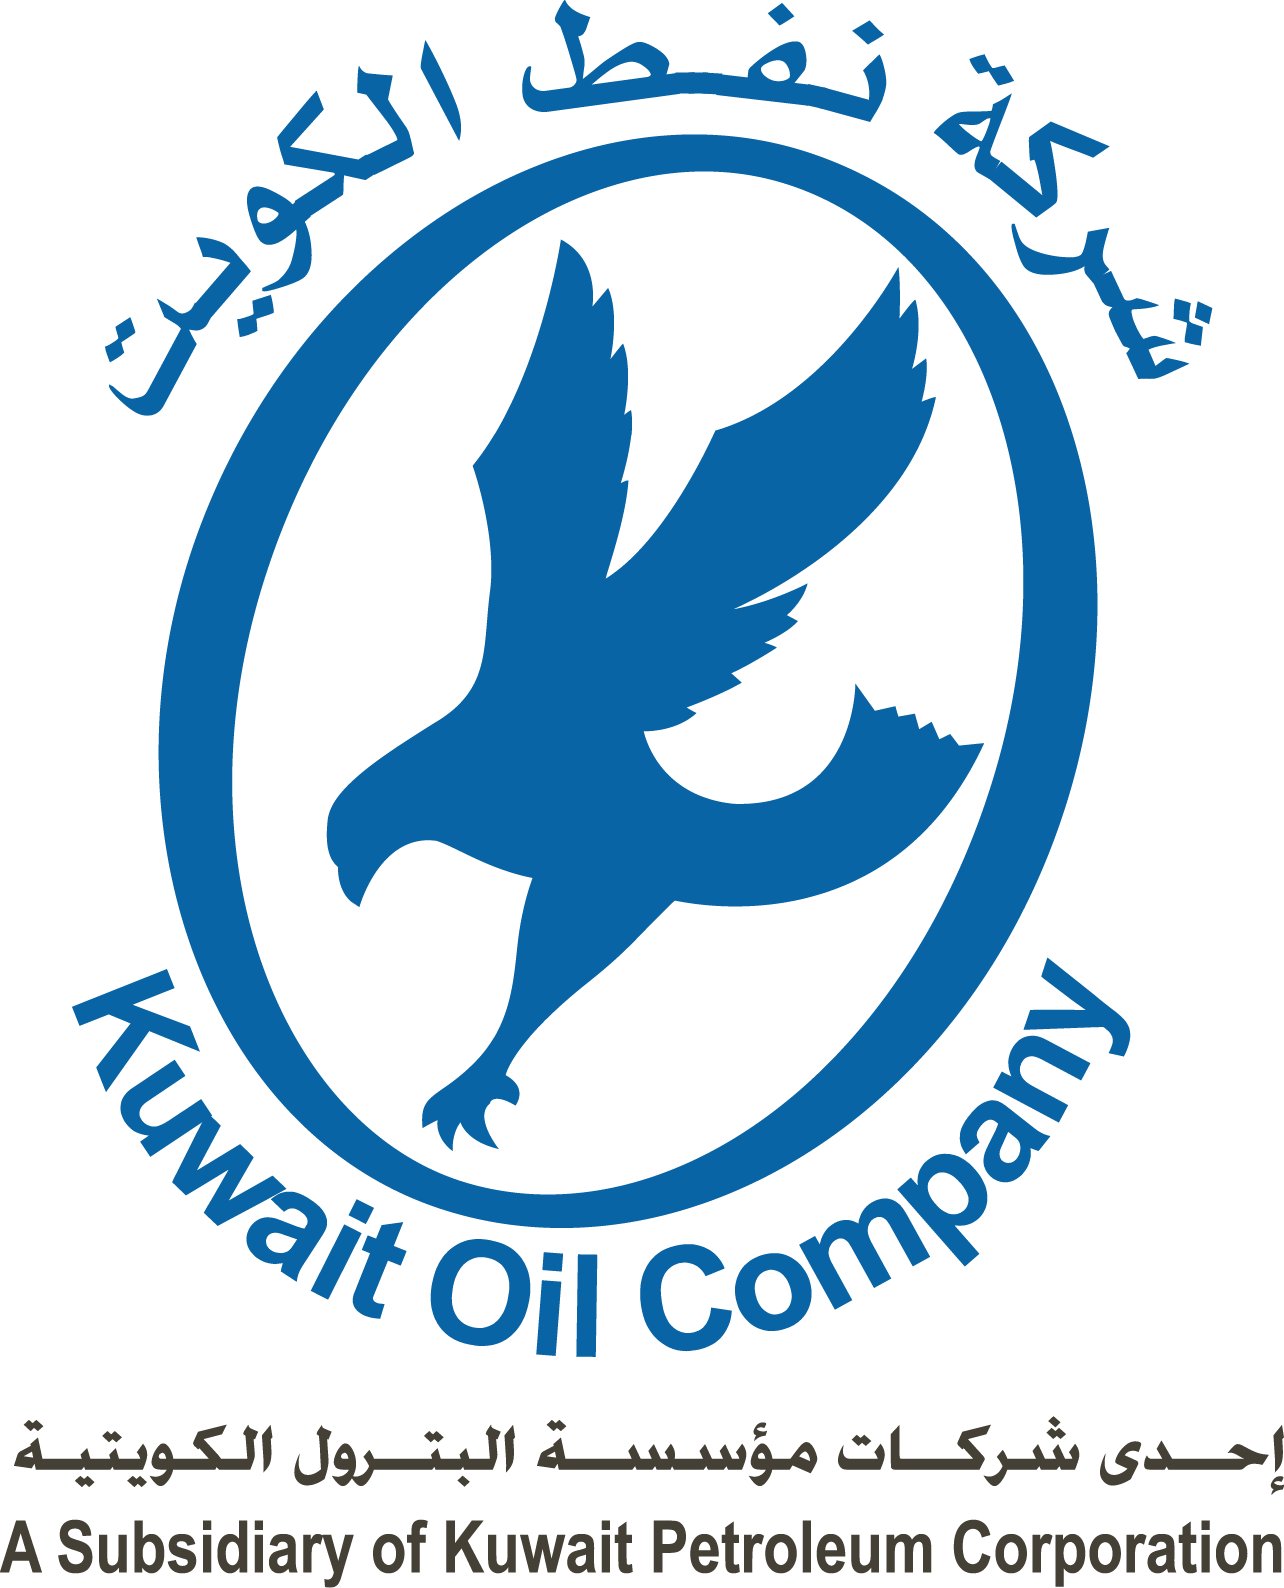 Kuwait Oil